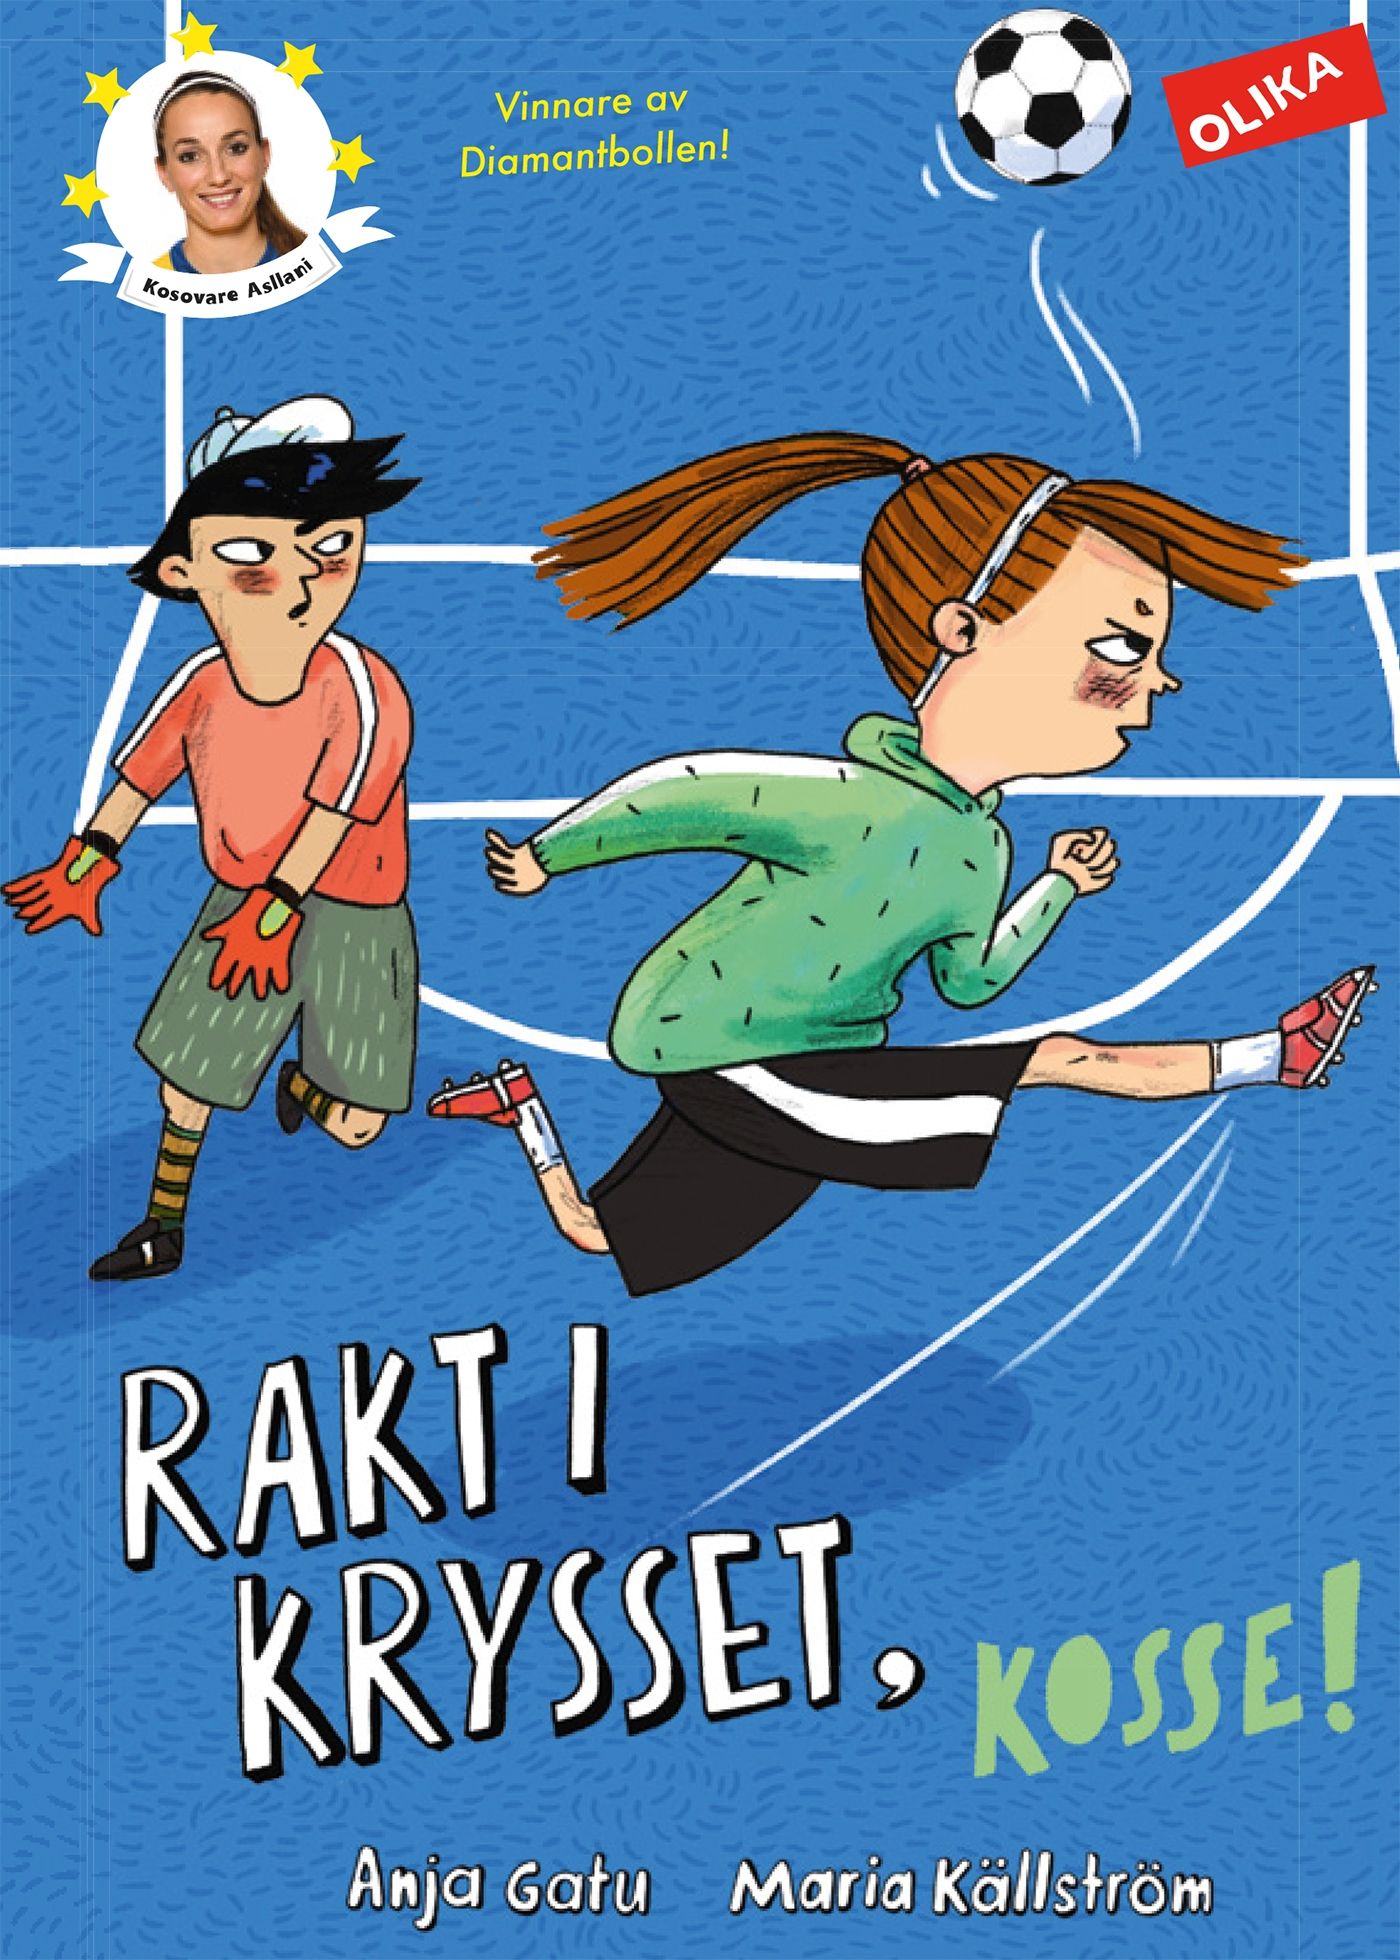 Rakt i krysset, Kosse!, eBook by Anja Gatu